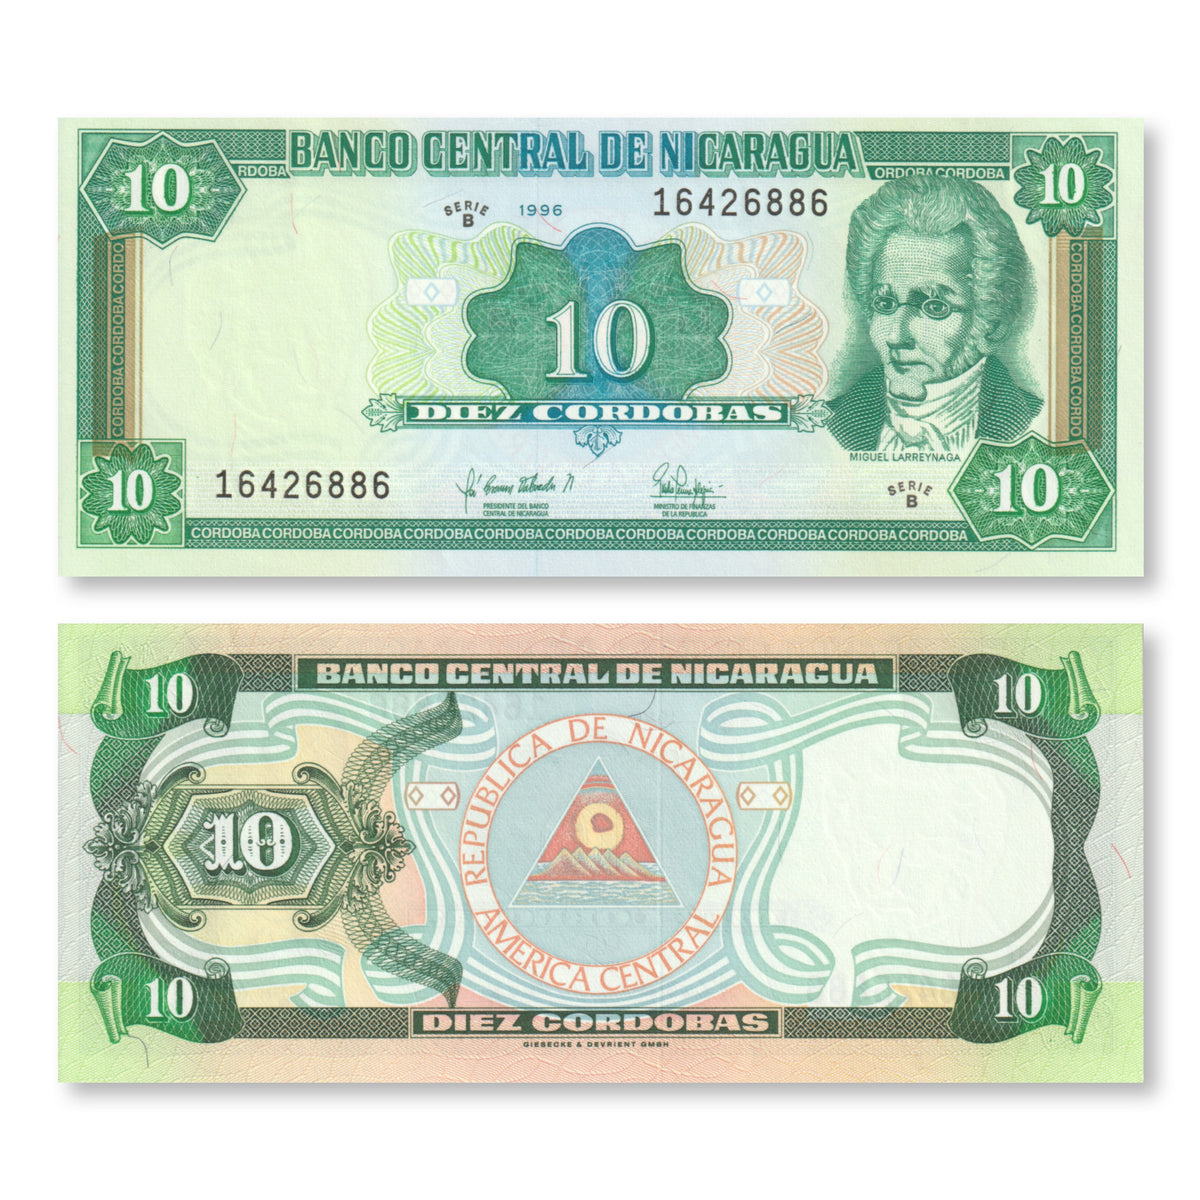 Nicaragua 10 Córdobas, 1996, B477a, P181, UNC - Robert's World Money - World Banknotes